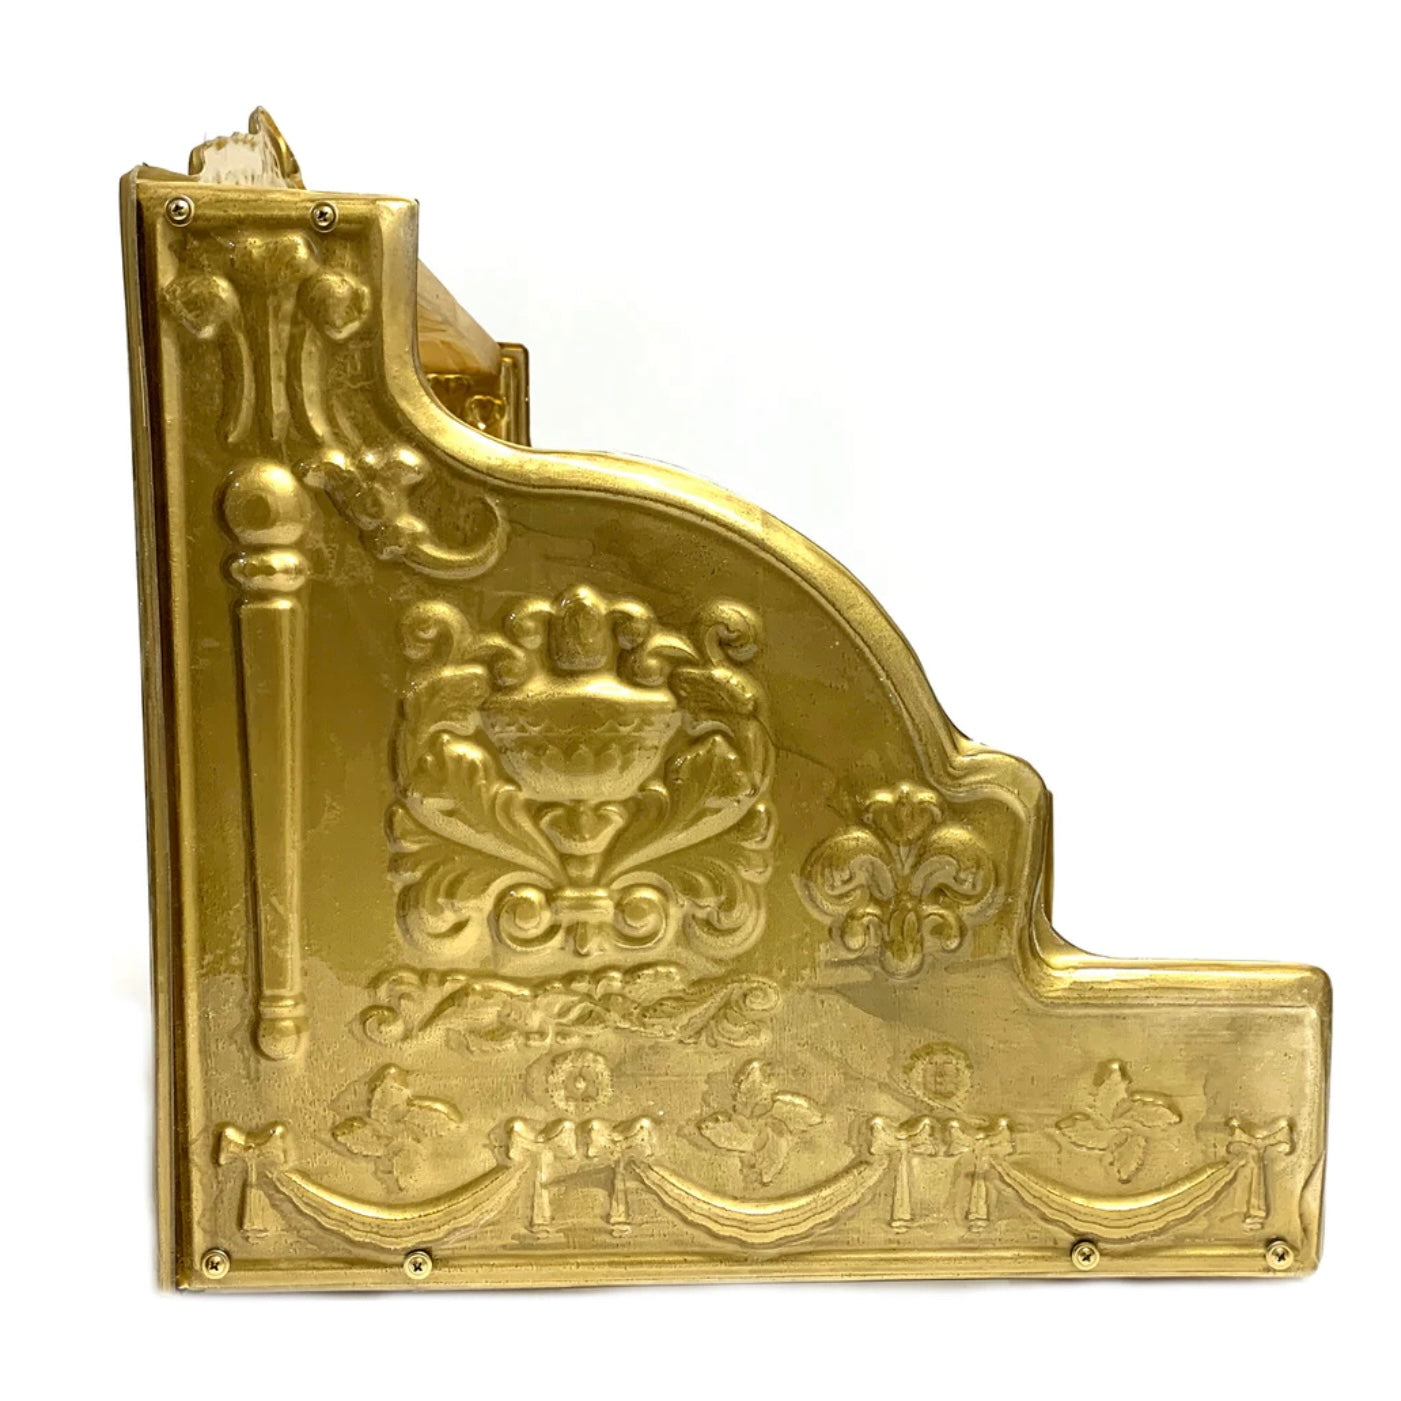 Antique Metal Style Cash Register Replica Lightweight Plastic Shell Prop - Gold - Gold